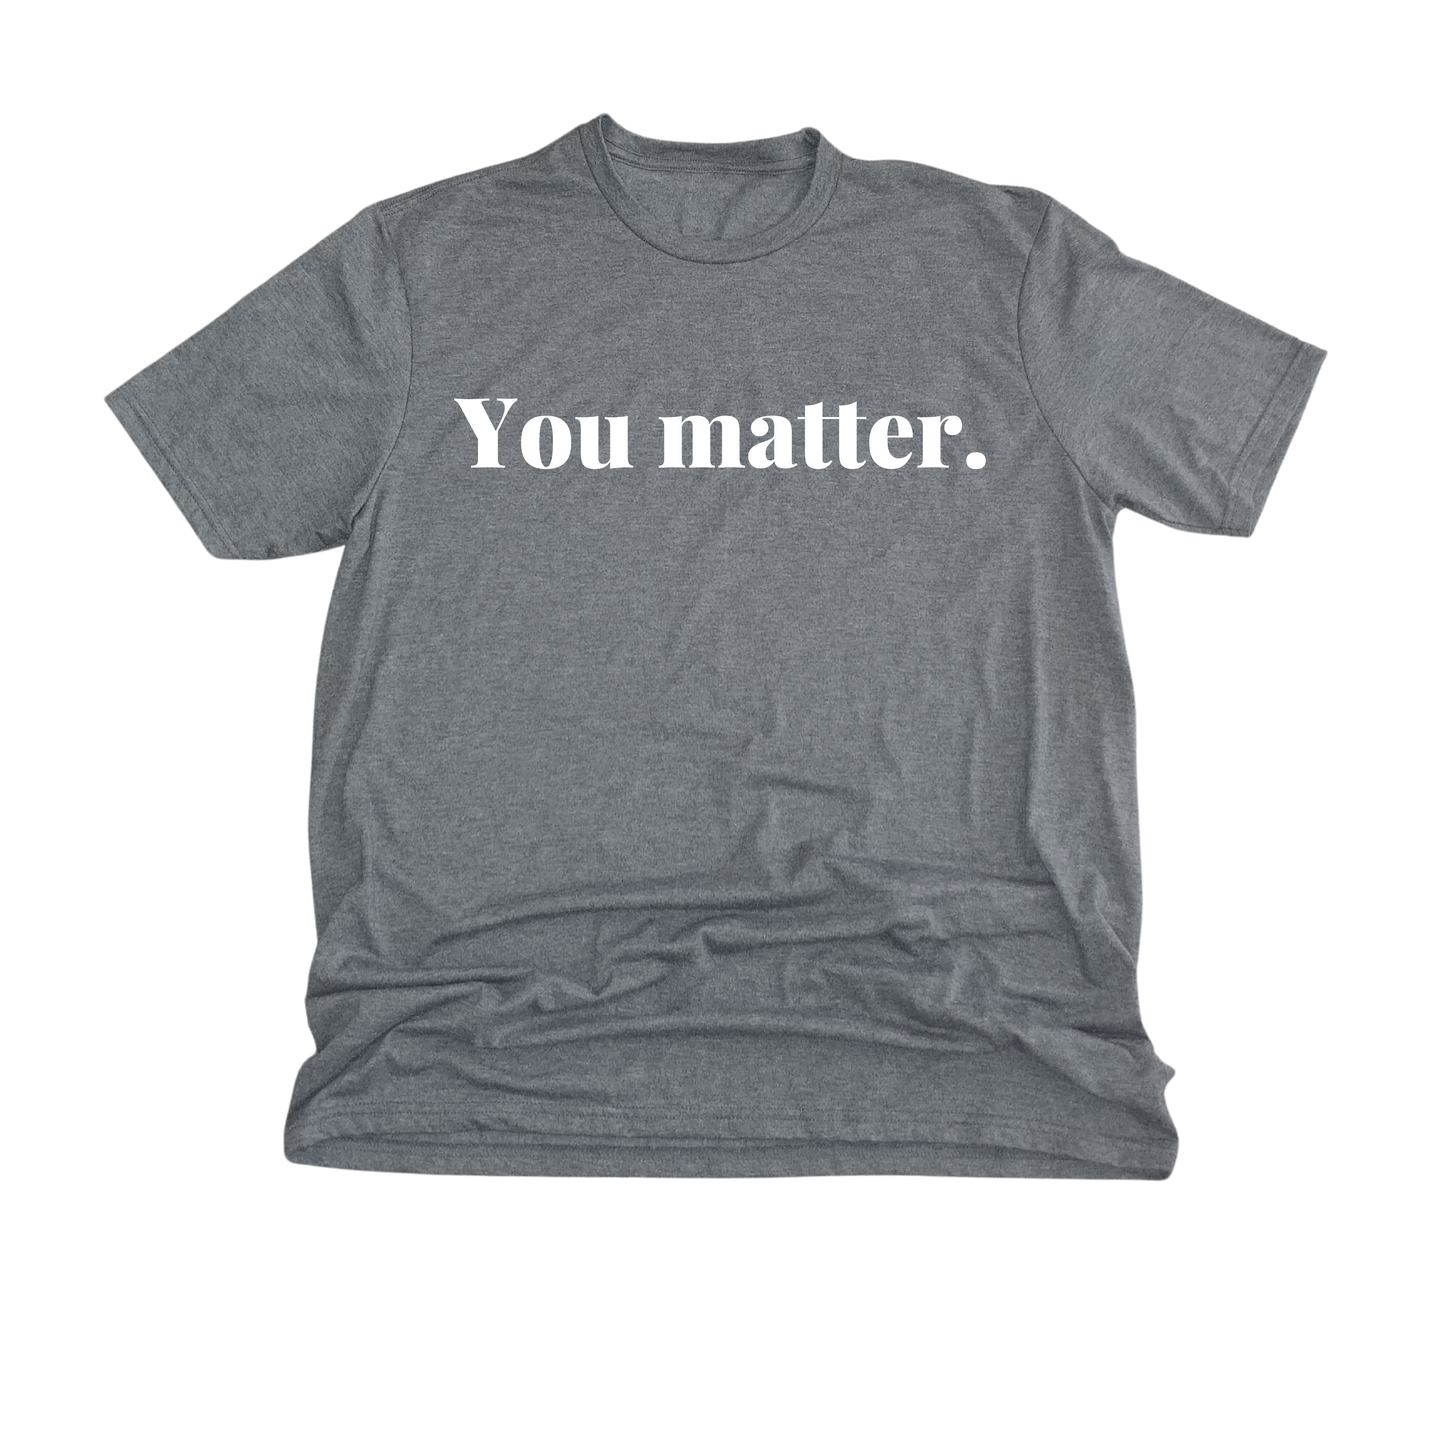 You matter. Tee